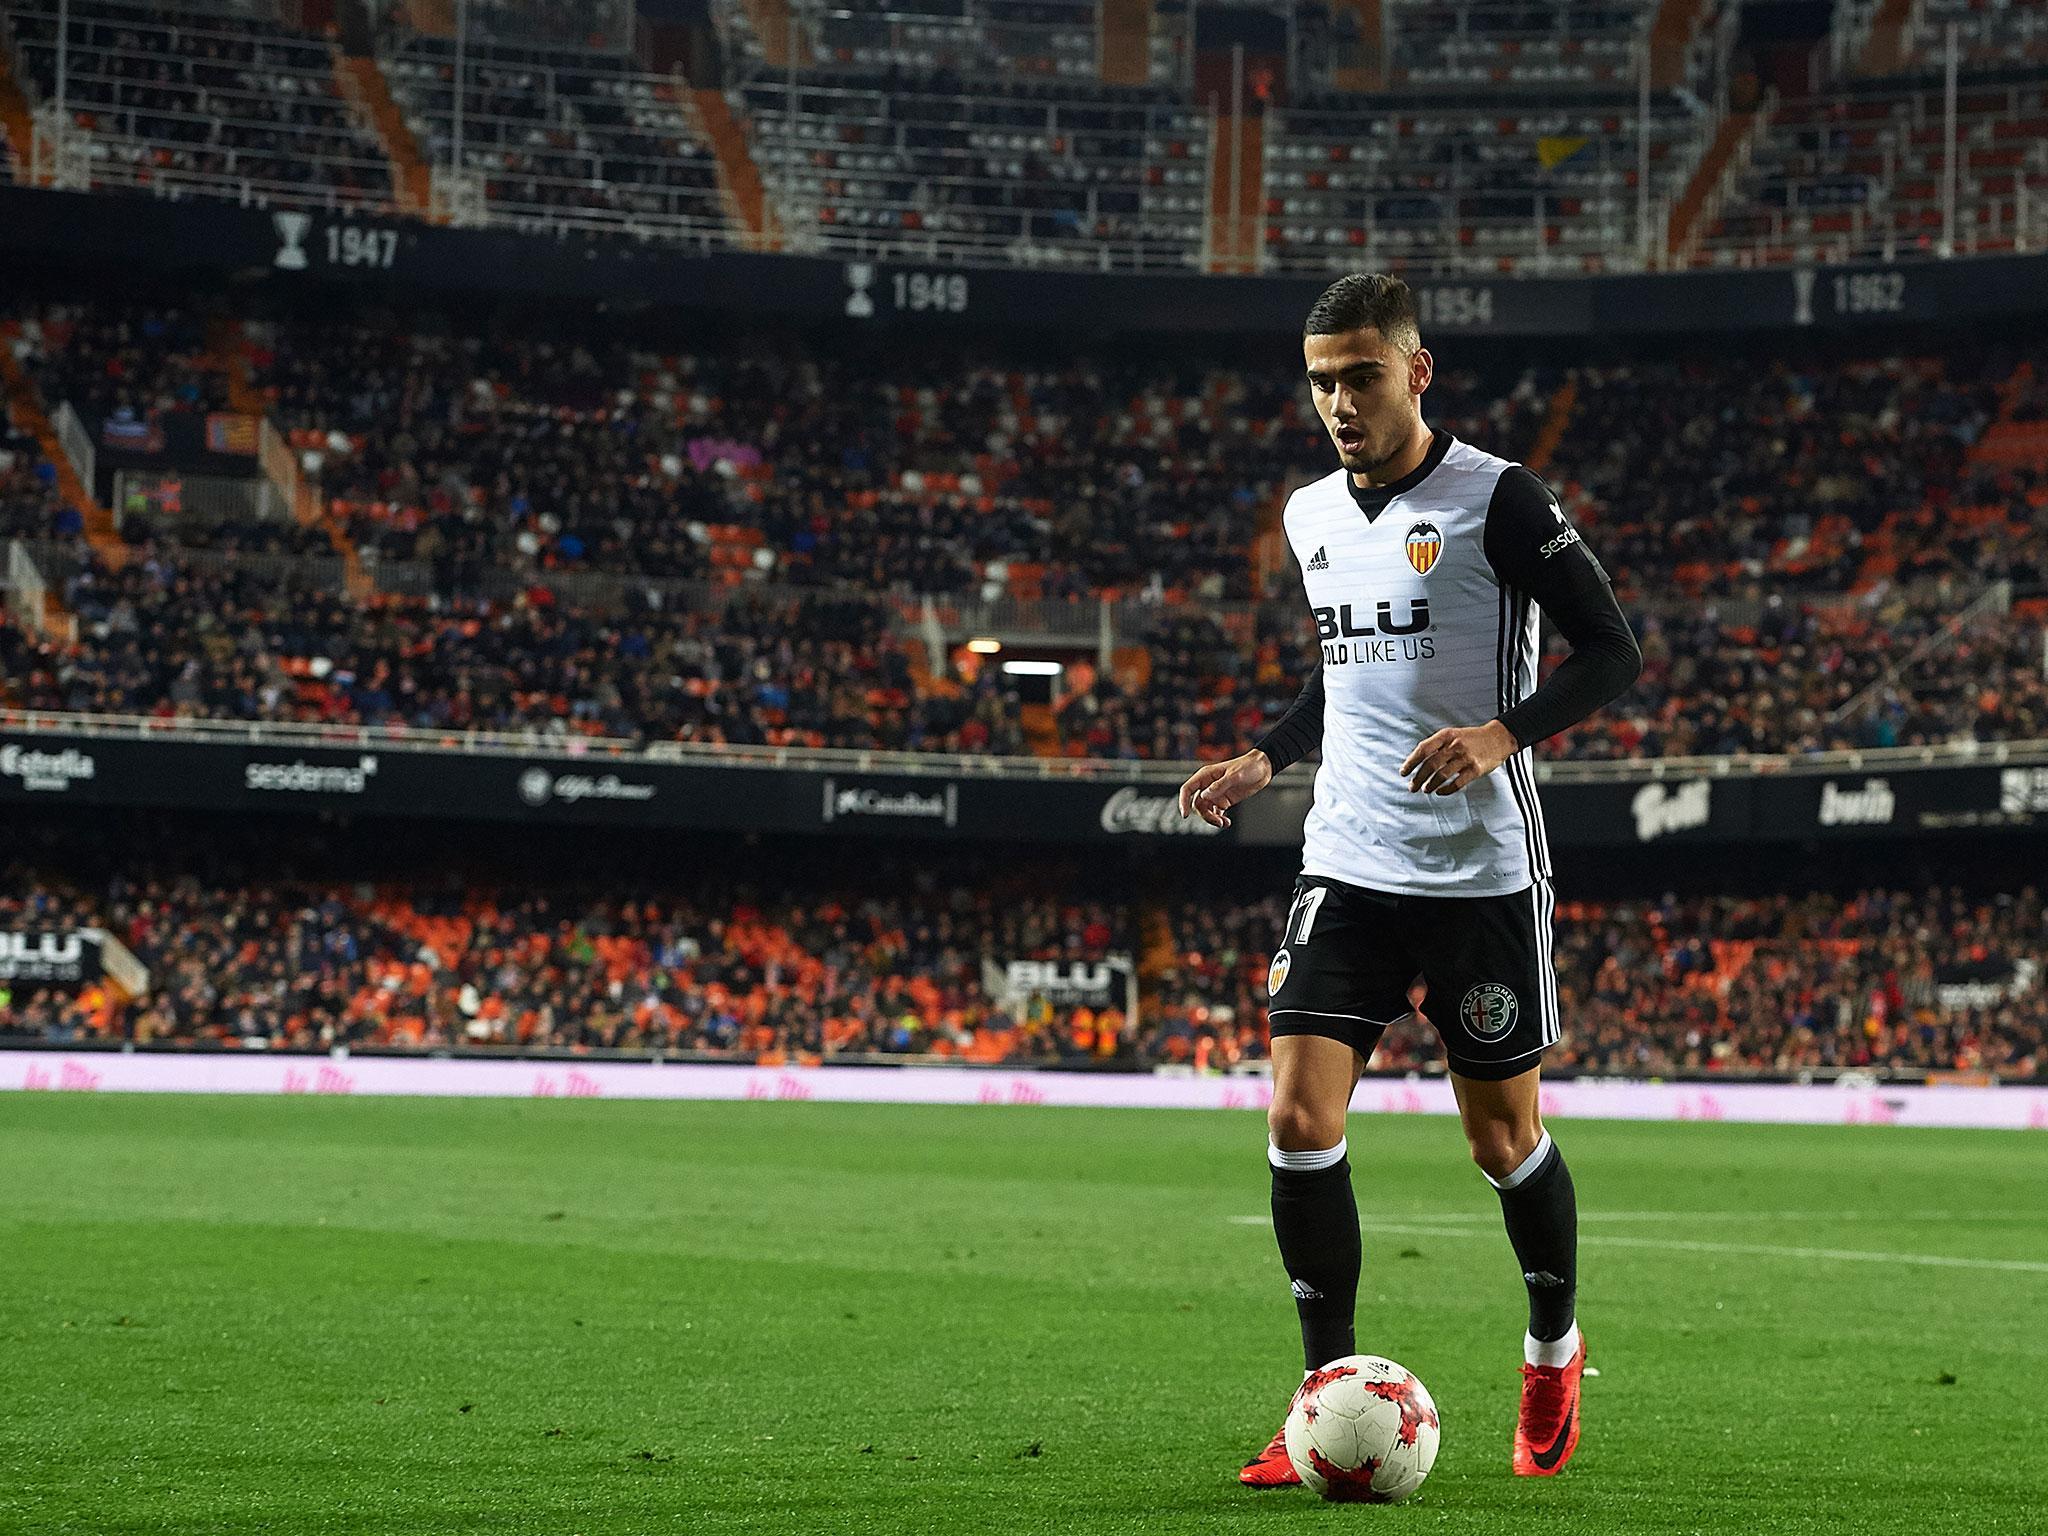 Manchester United's Andreas Pereira confirms Valencia desire to sign